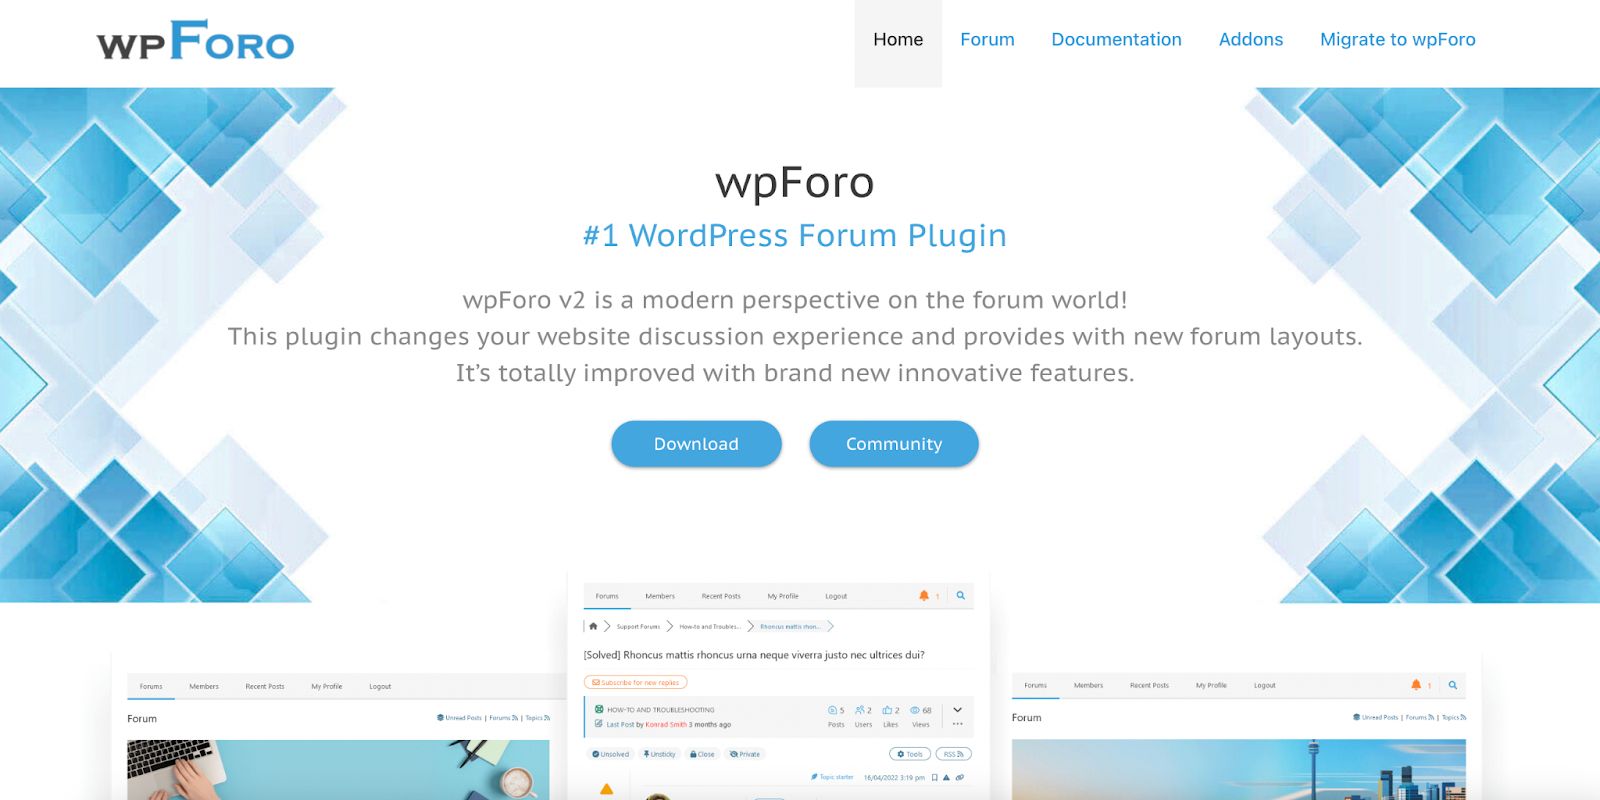 wpForo Forum for WordPress forums.